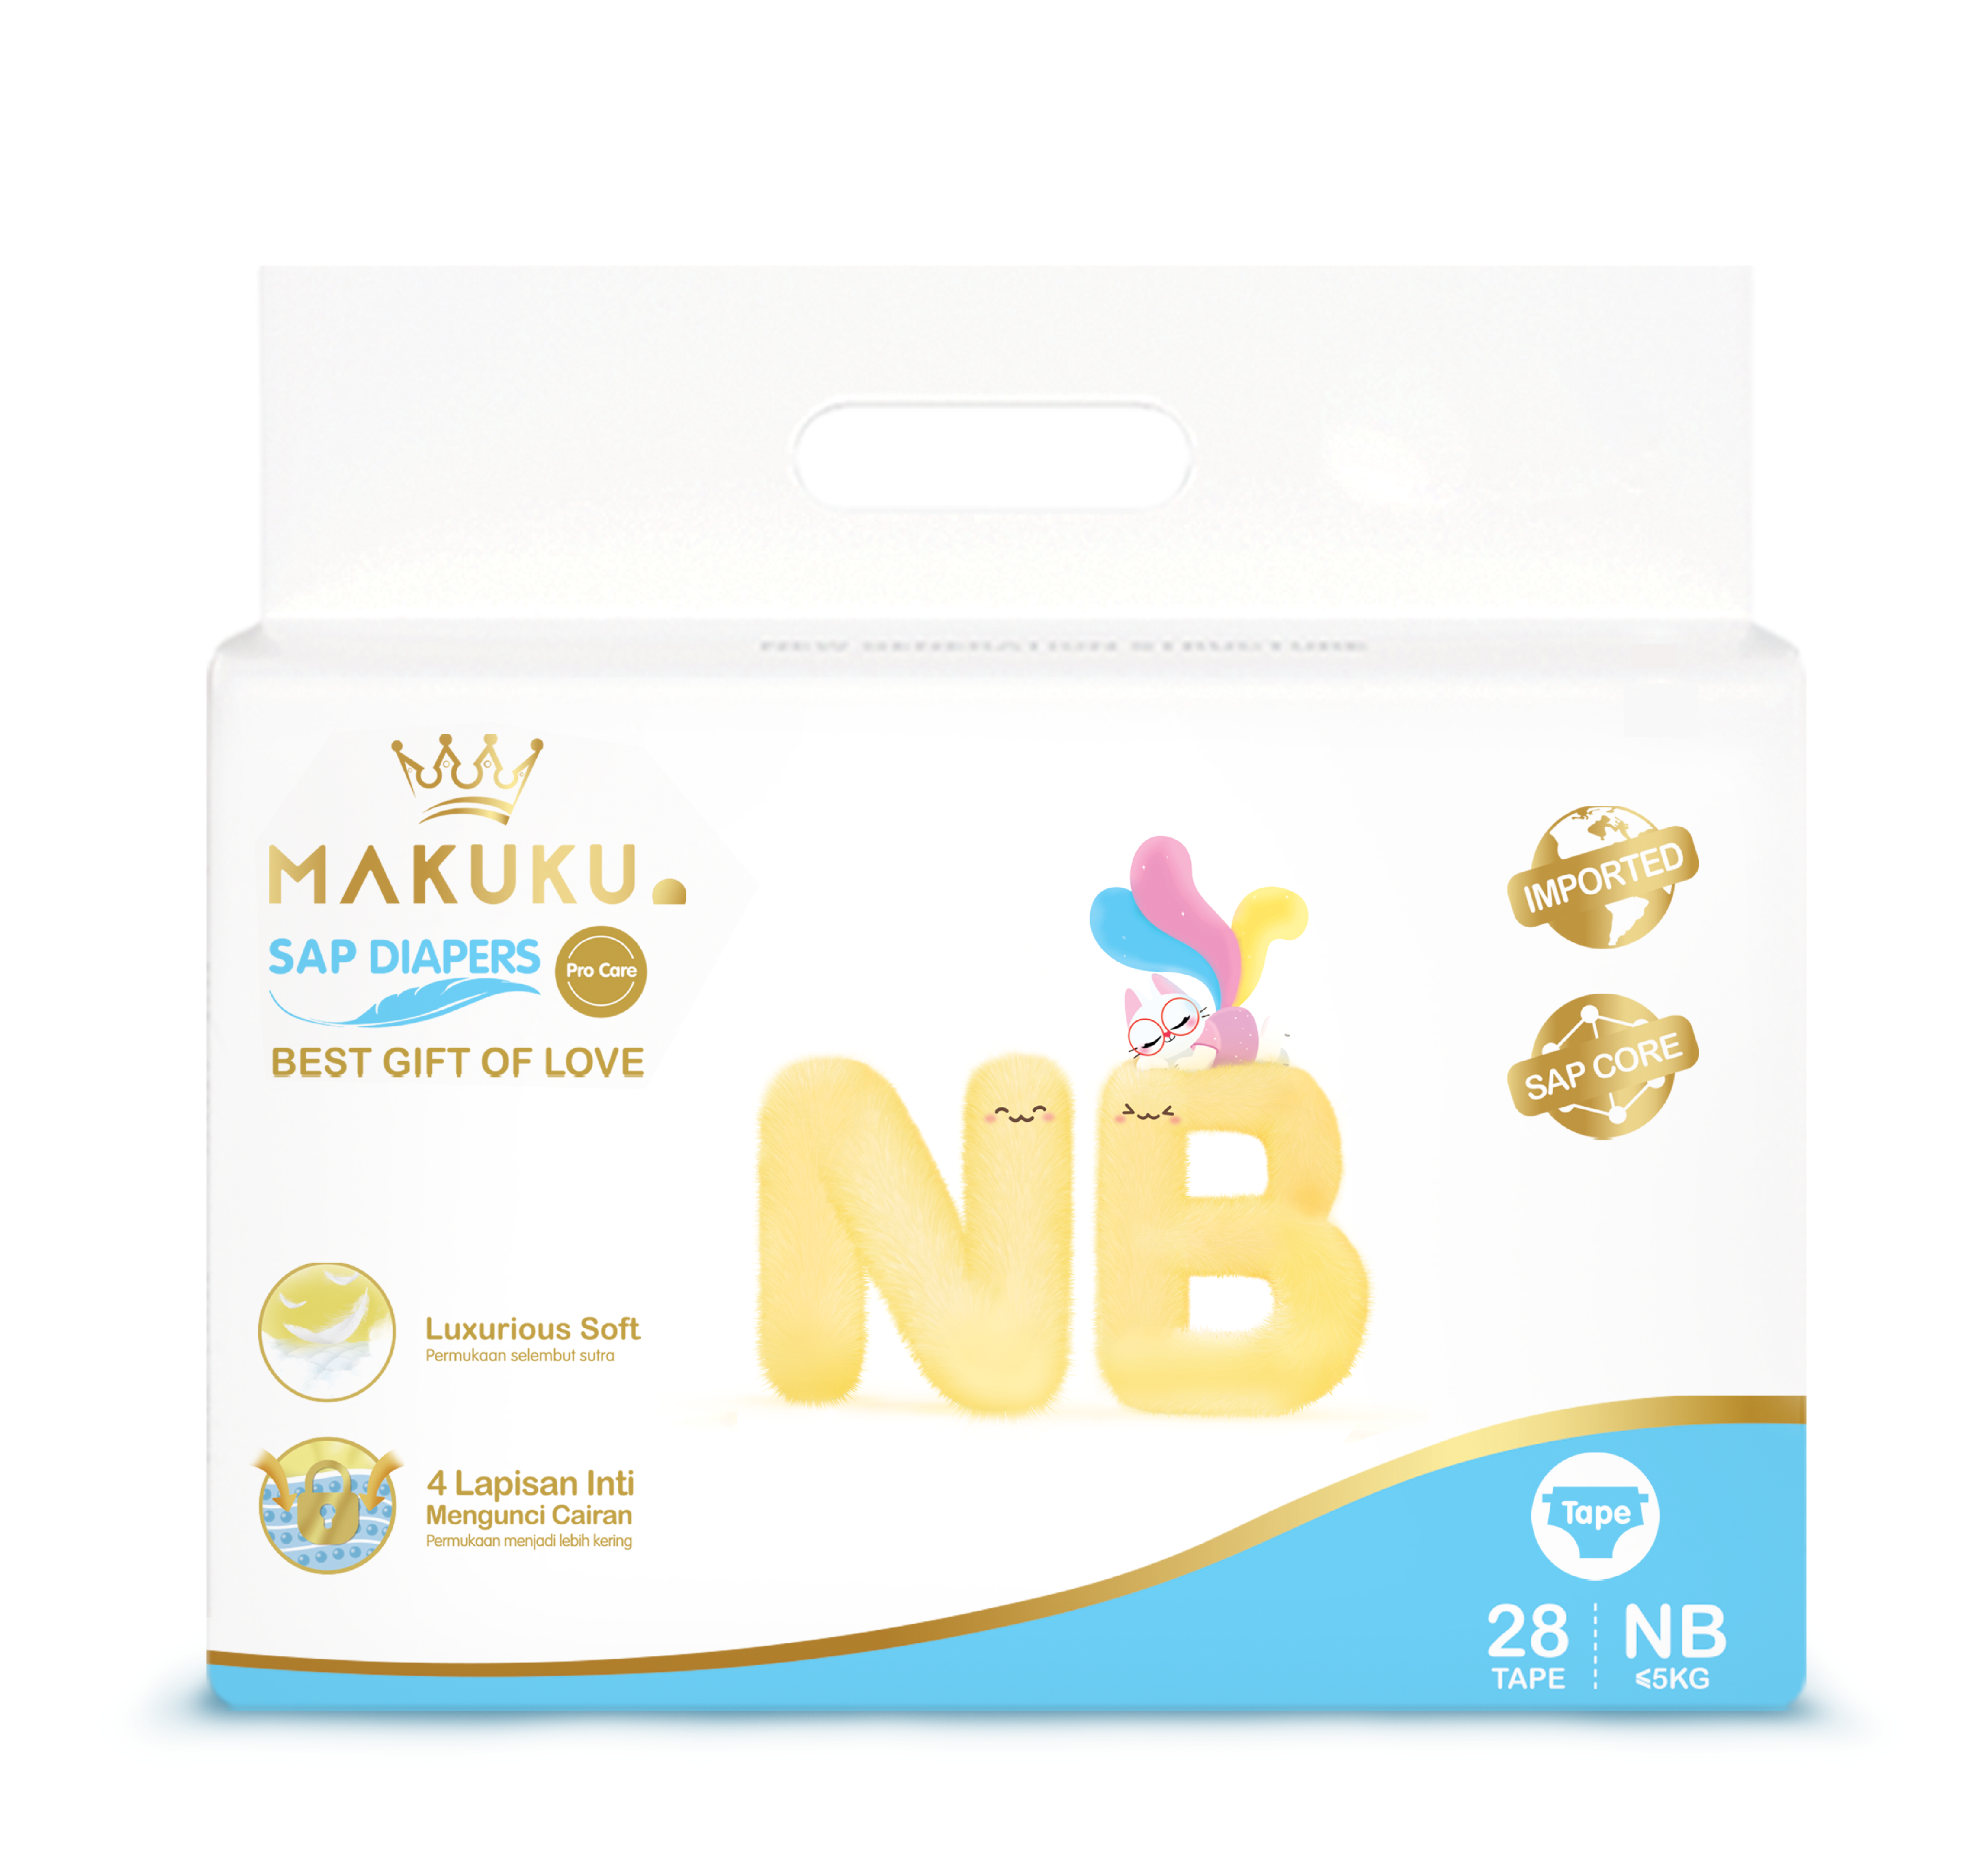 MAKUKU SAP Diapers Pro Care NB尺寸包装图片